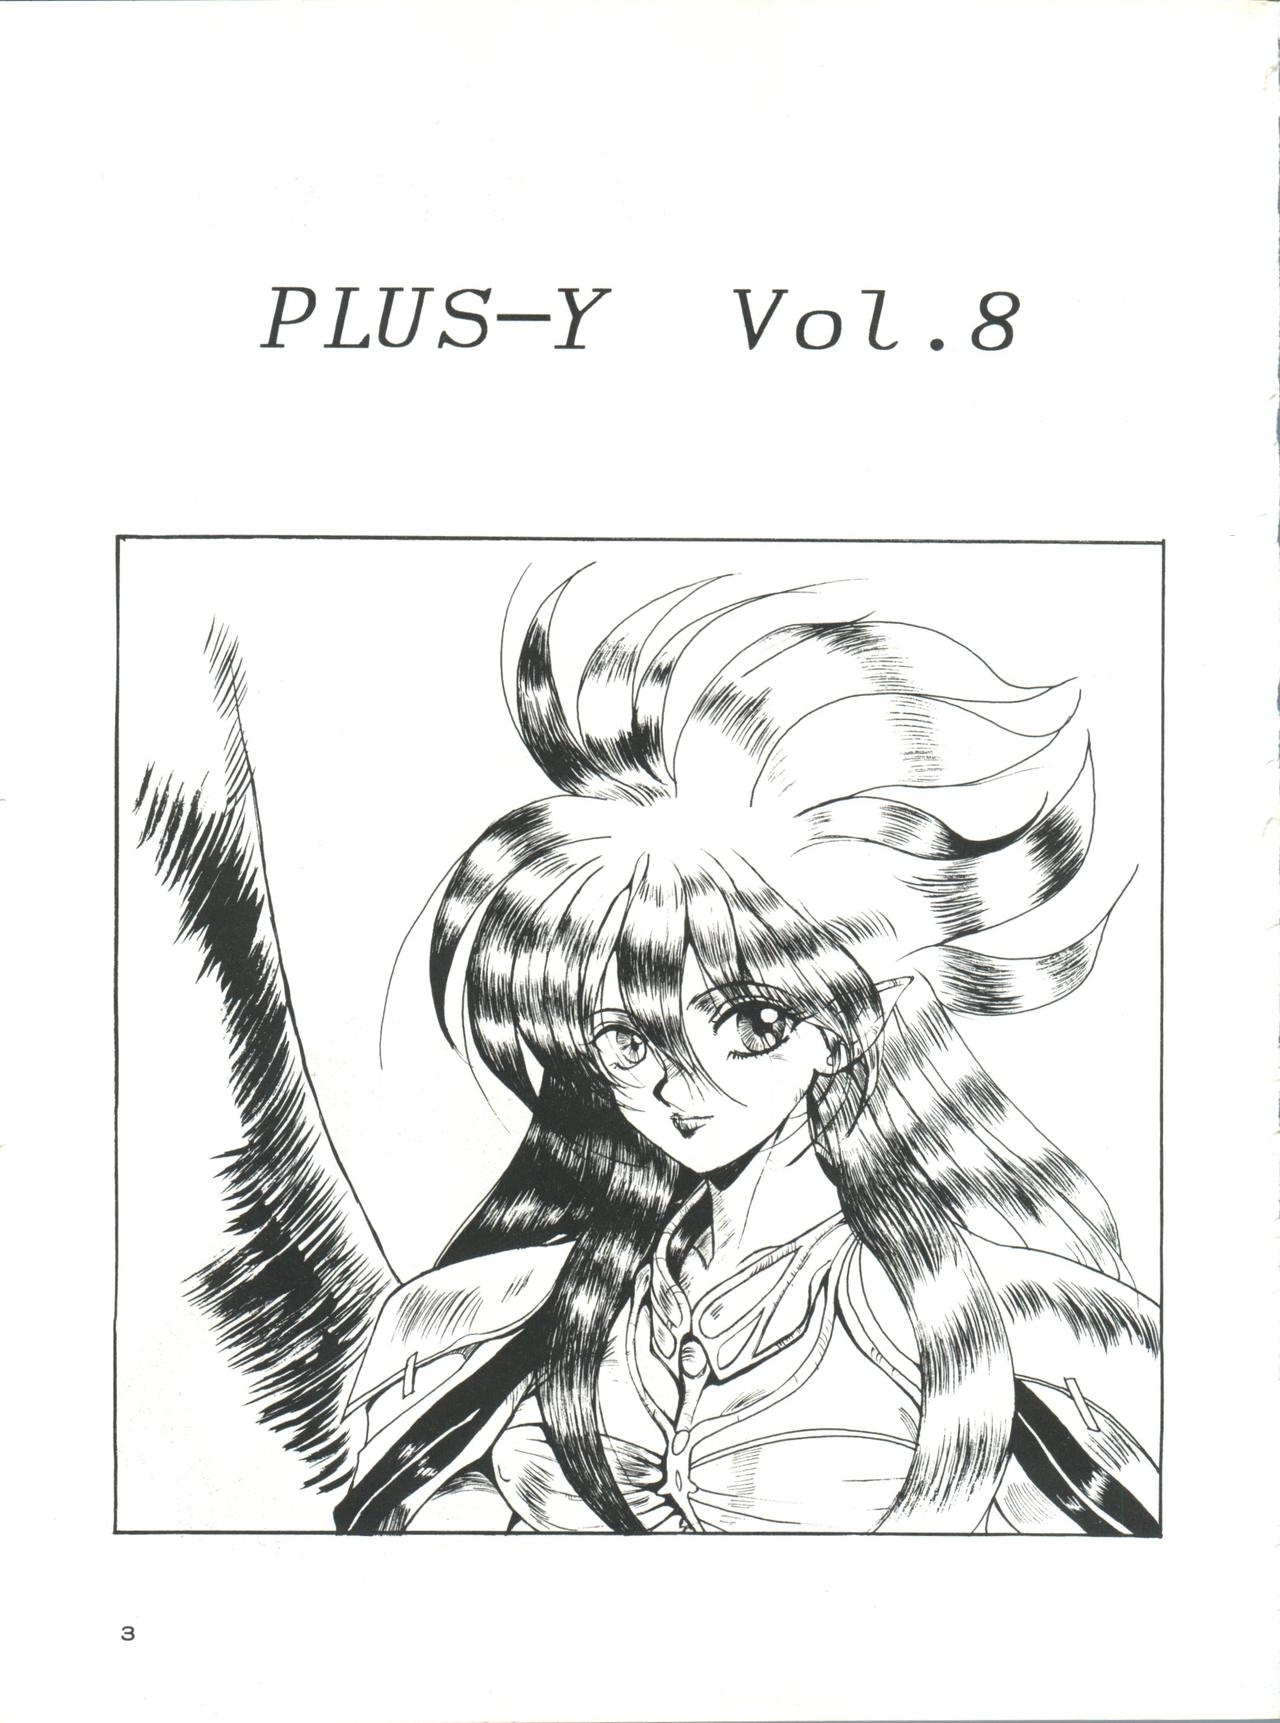 [Team Plus-Y (Takanabe Chitose, Haniwa Pao)] PLUS-Y Vol.8 (Ah! My Goddess, Zettai Muteki Raijin-Oh) 3